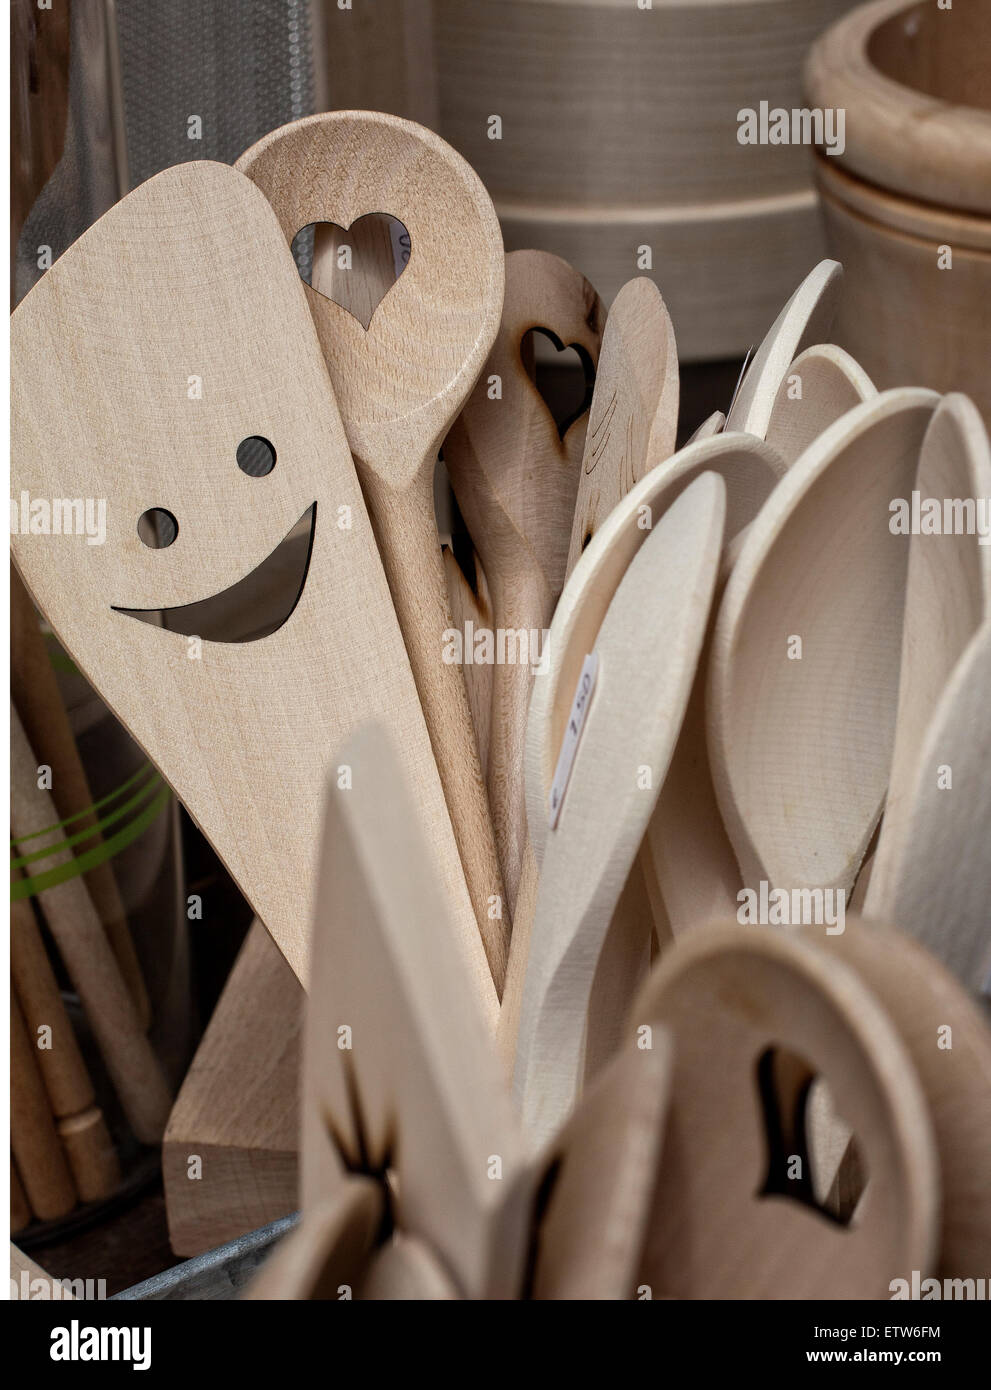 wooden spoons for cuisine in italian market Stock Photo